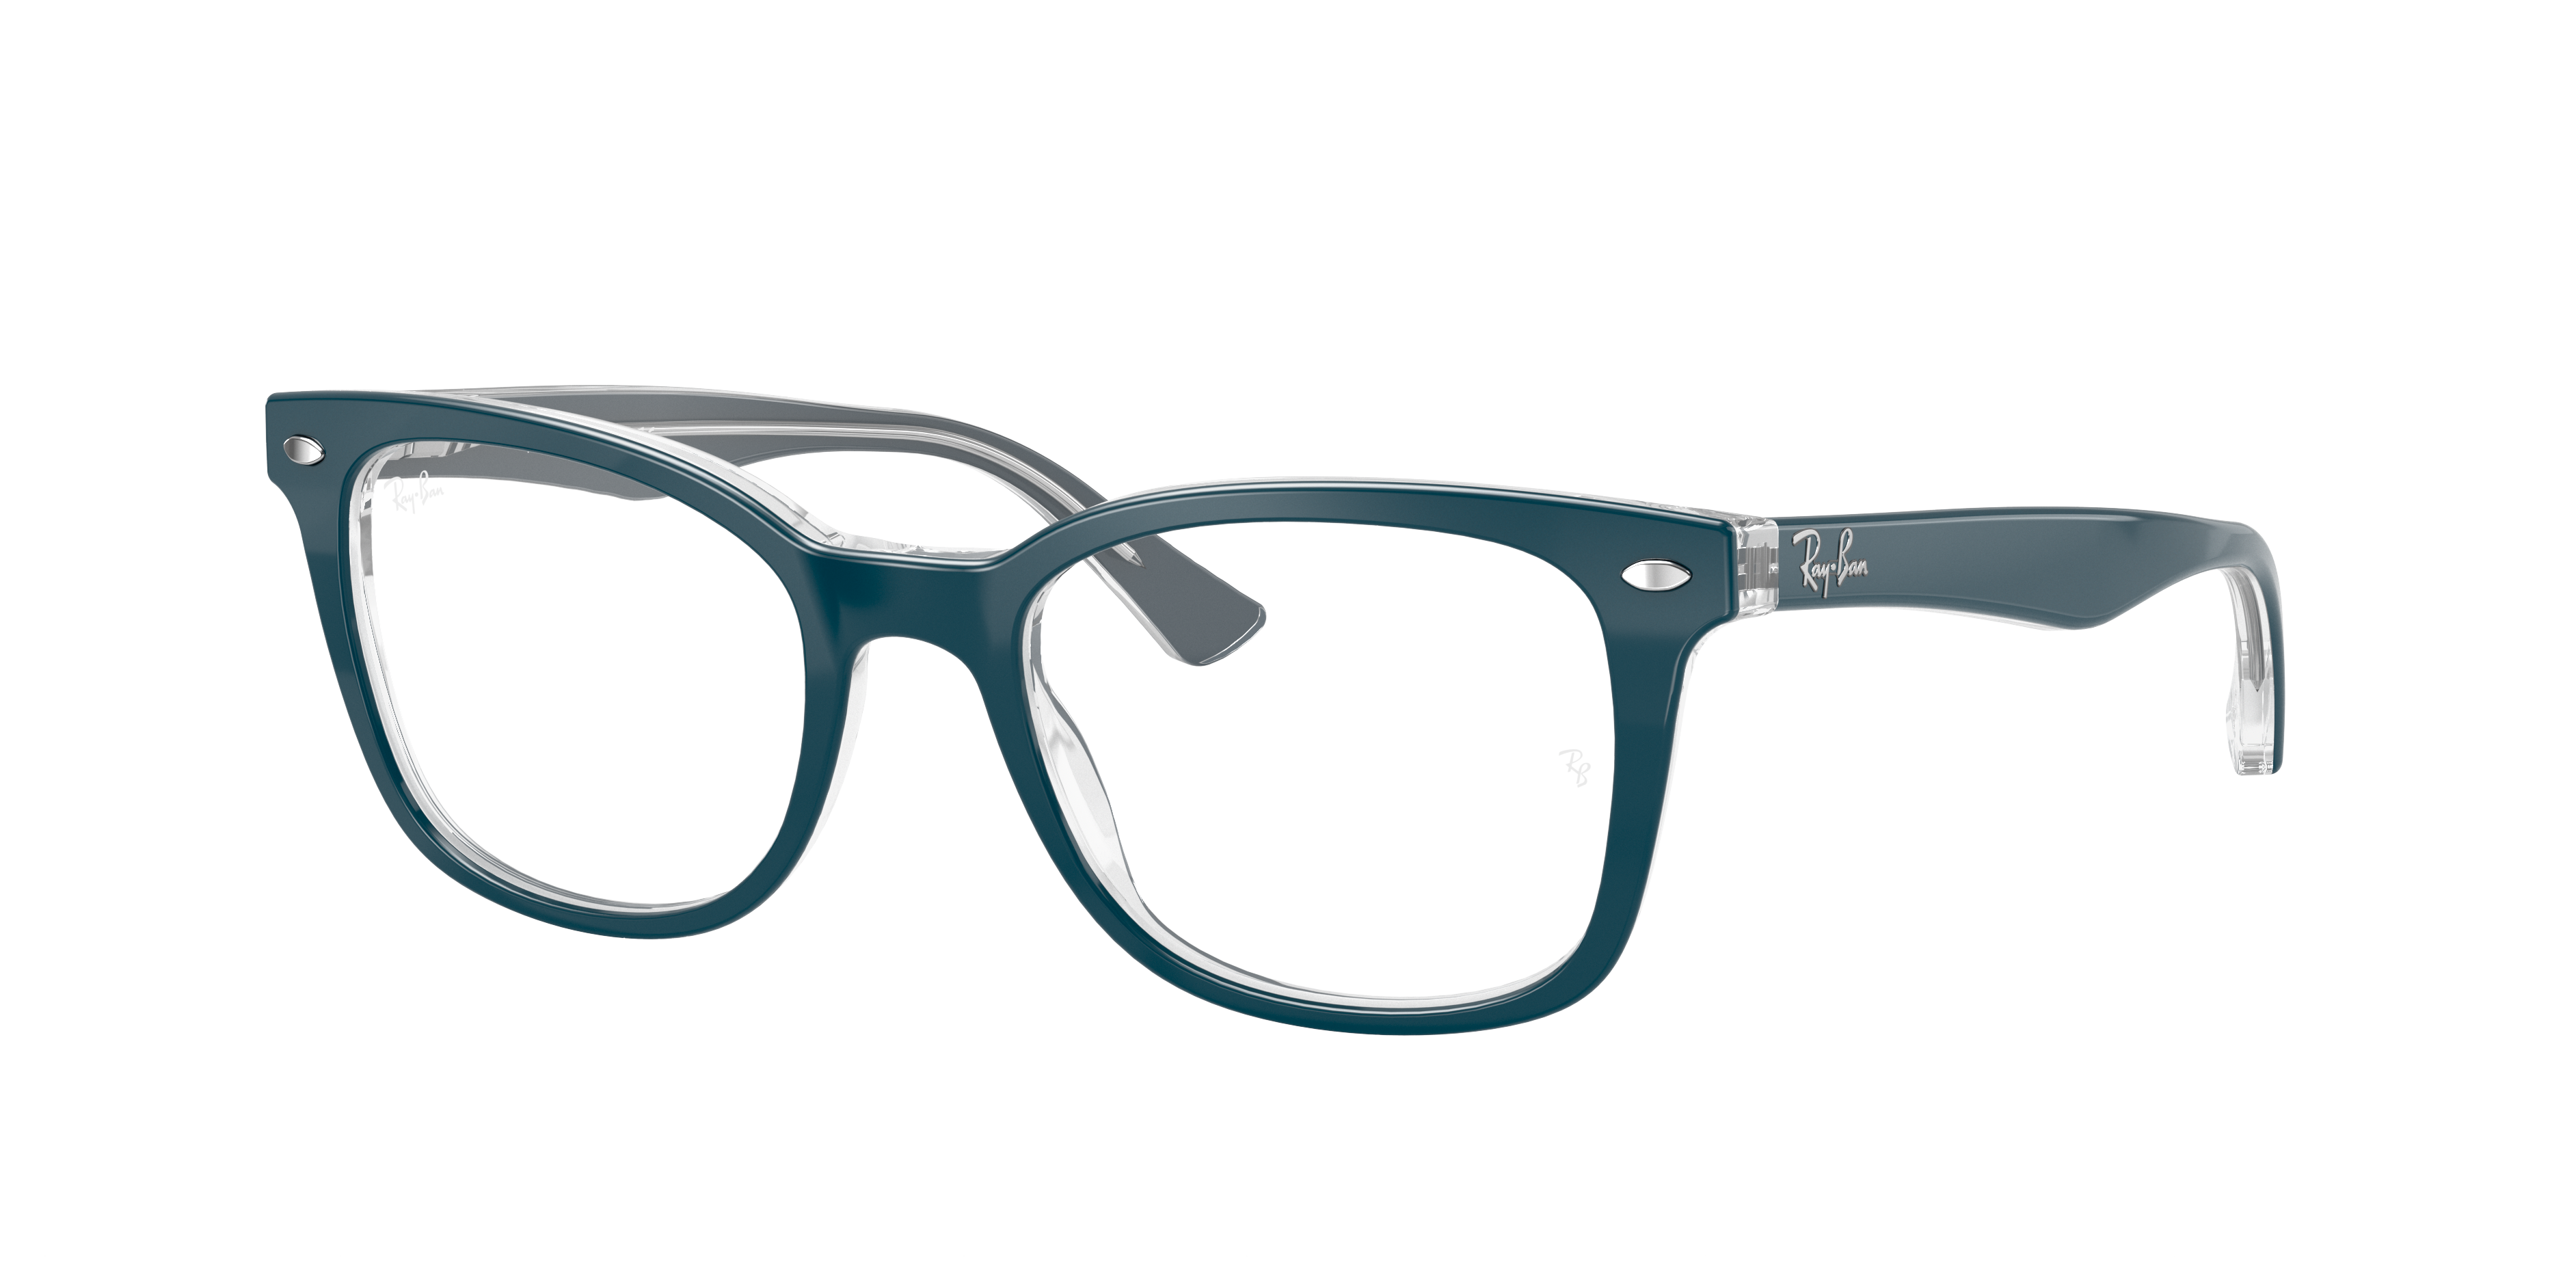 Rb5285 Optics Eyeglasses with Turquoise Frame | Ray-Ban®